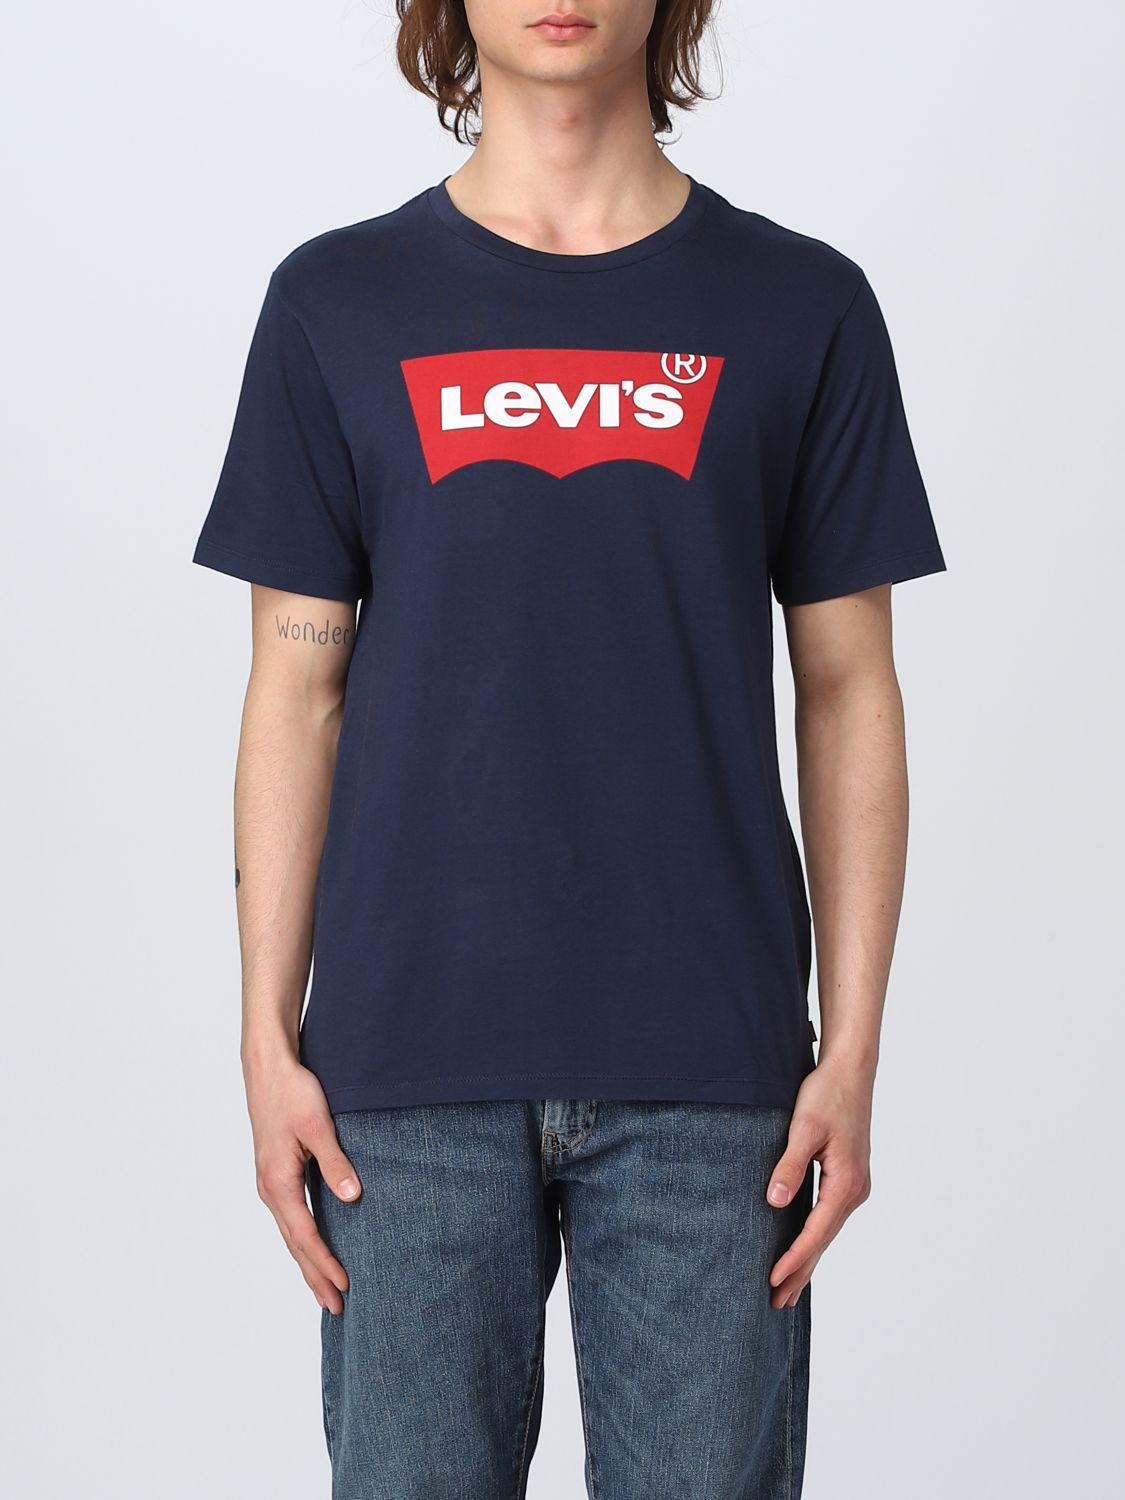 Nauwgezet Rendezvous Aarzelen LEVI'S: t-shirt for man - Blue | Levi's t-shirt 177830139 online on  GIGLIO.COM